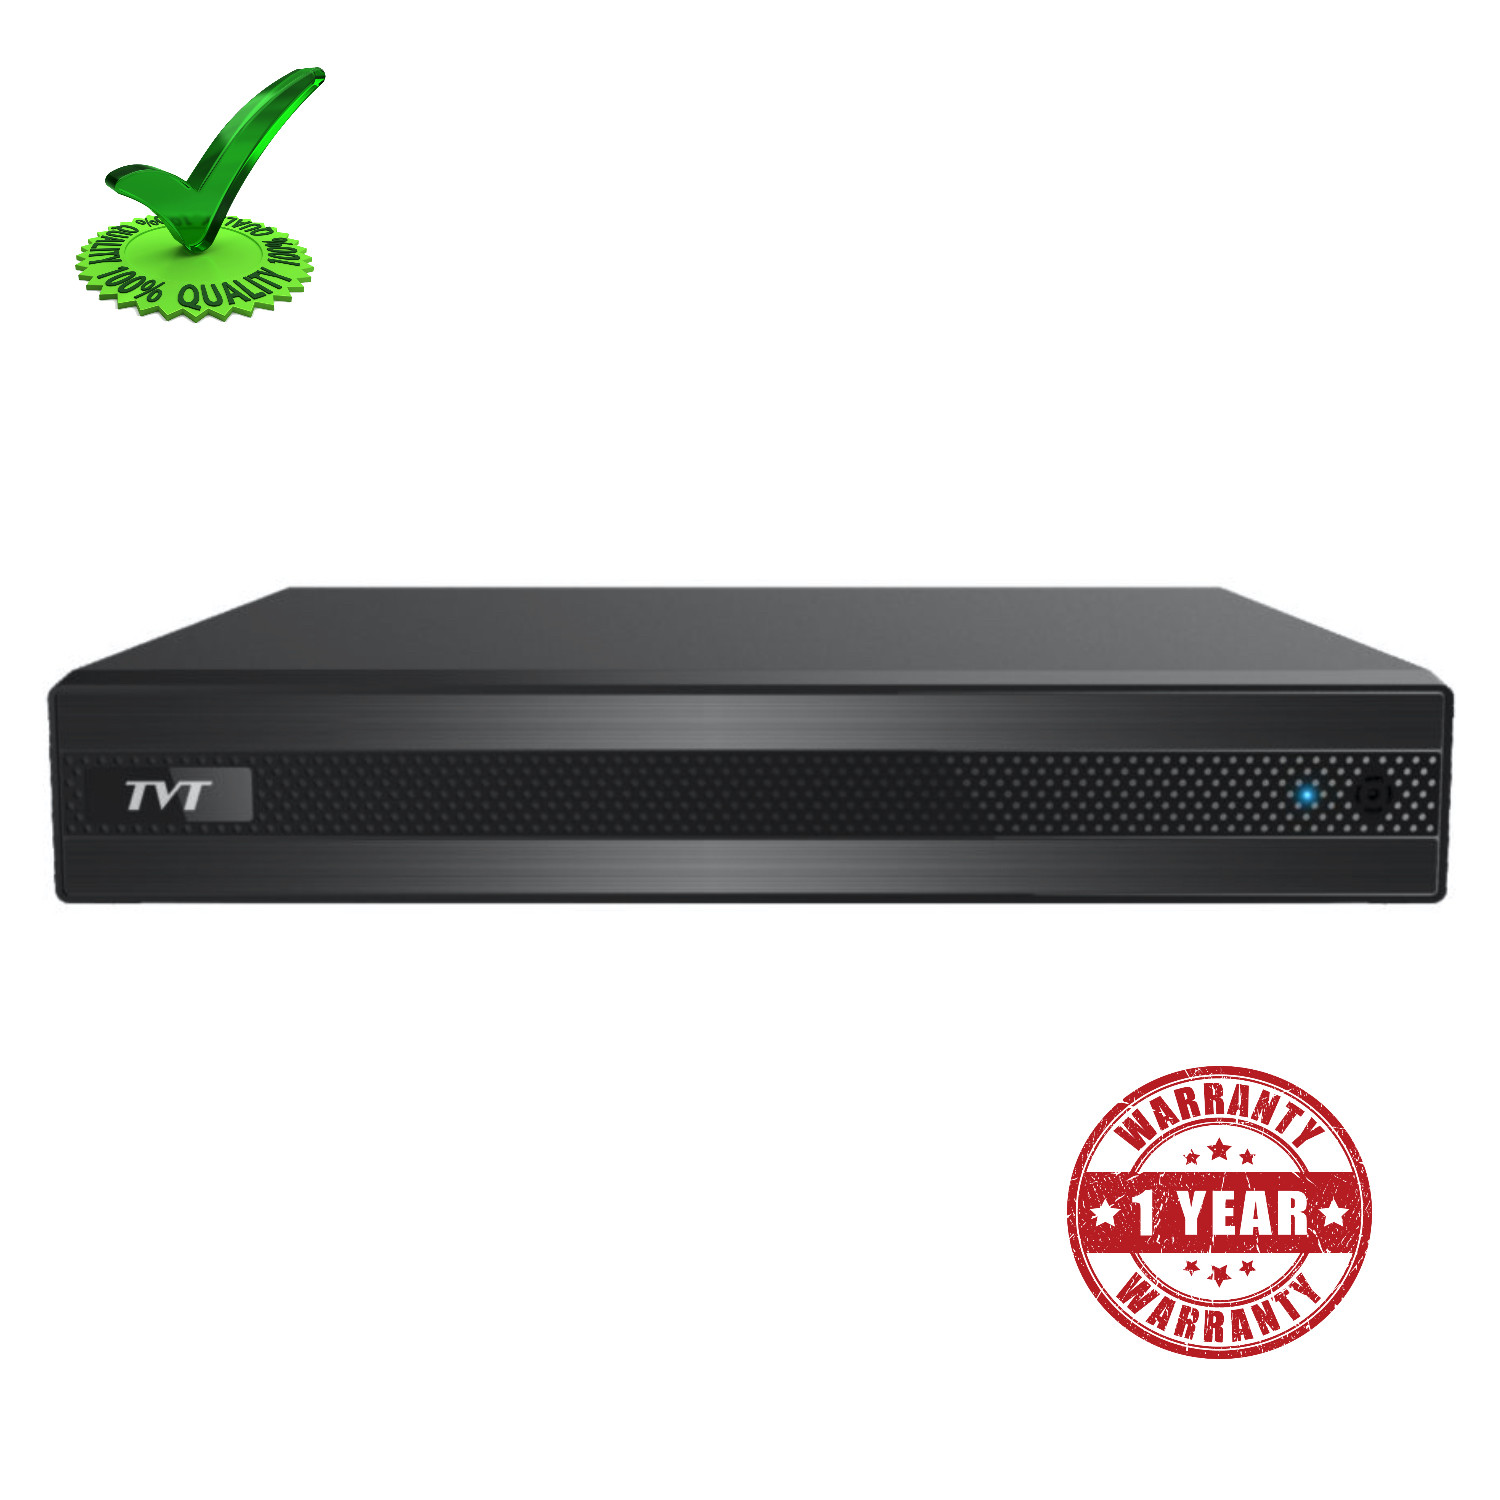 TVT TD 3108B1- 8ch HD Network Video Recorder 